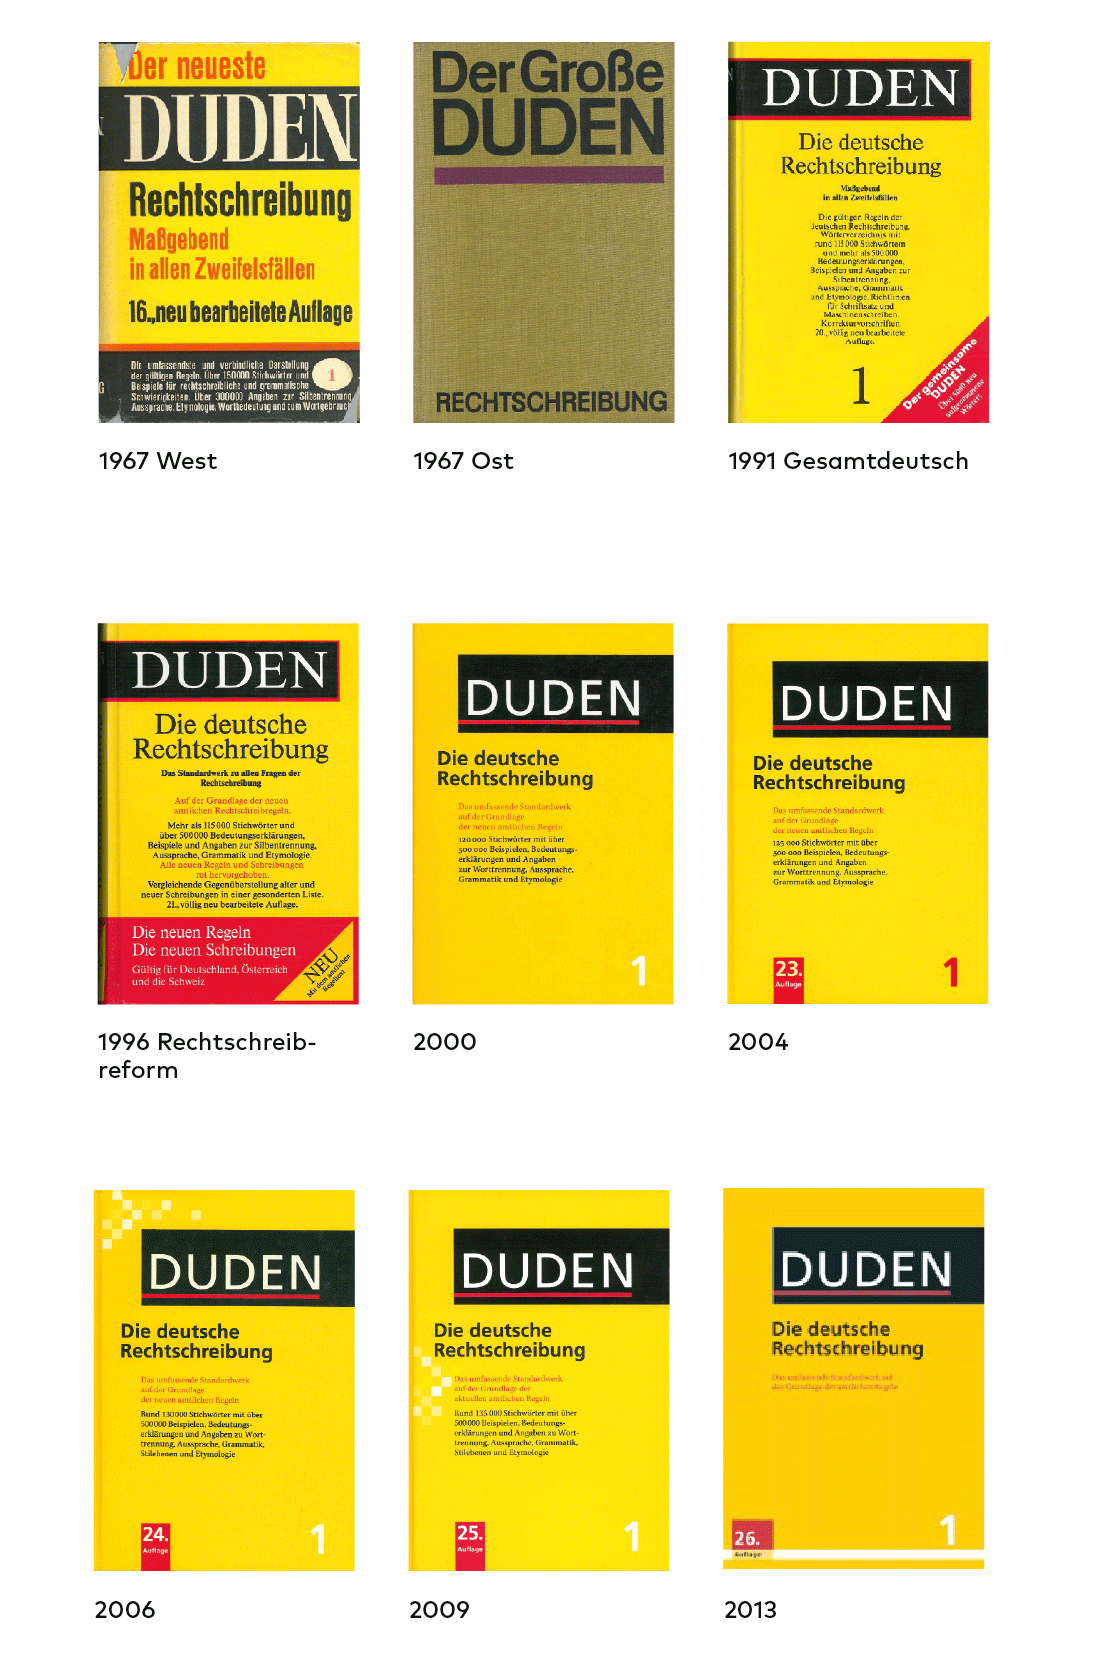 Duden, Corporate Design, Corporate Identity, Logodesign, Branding